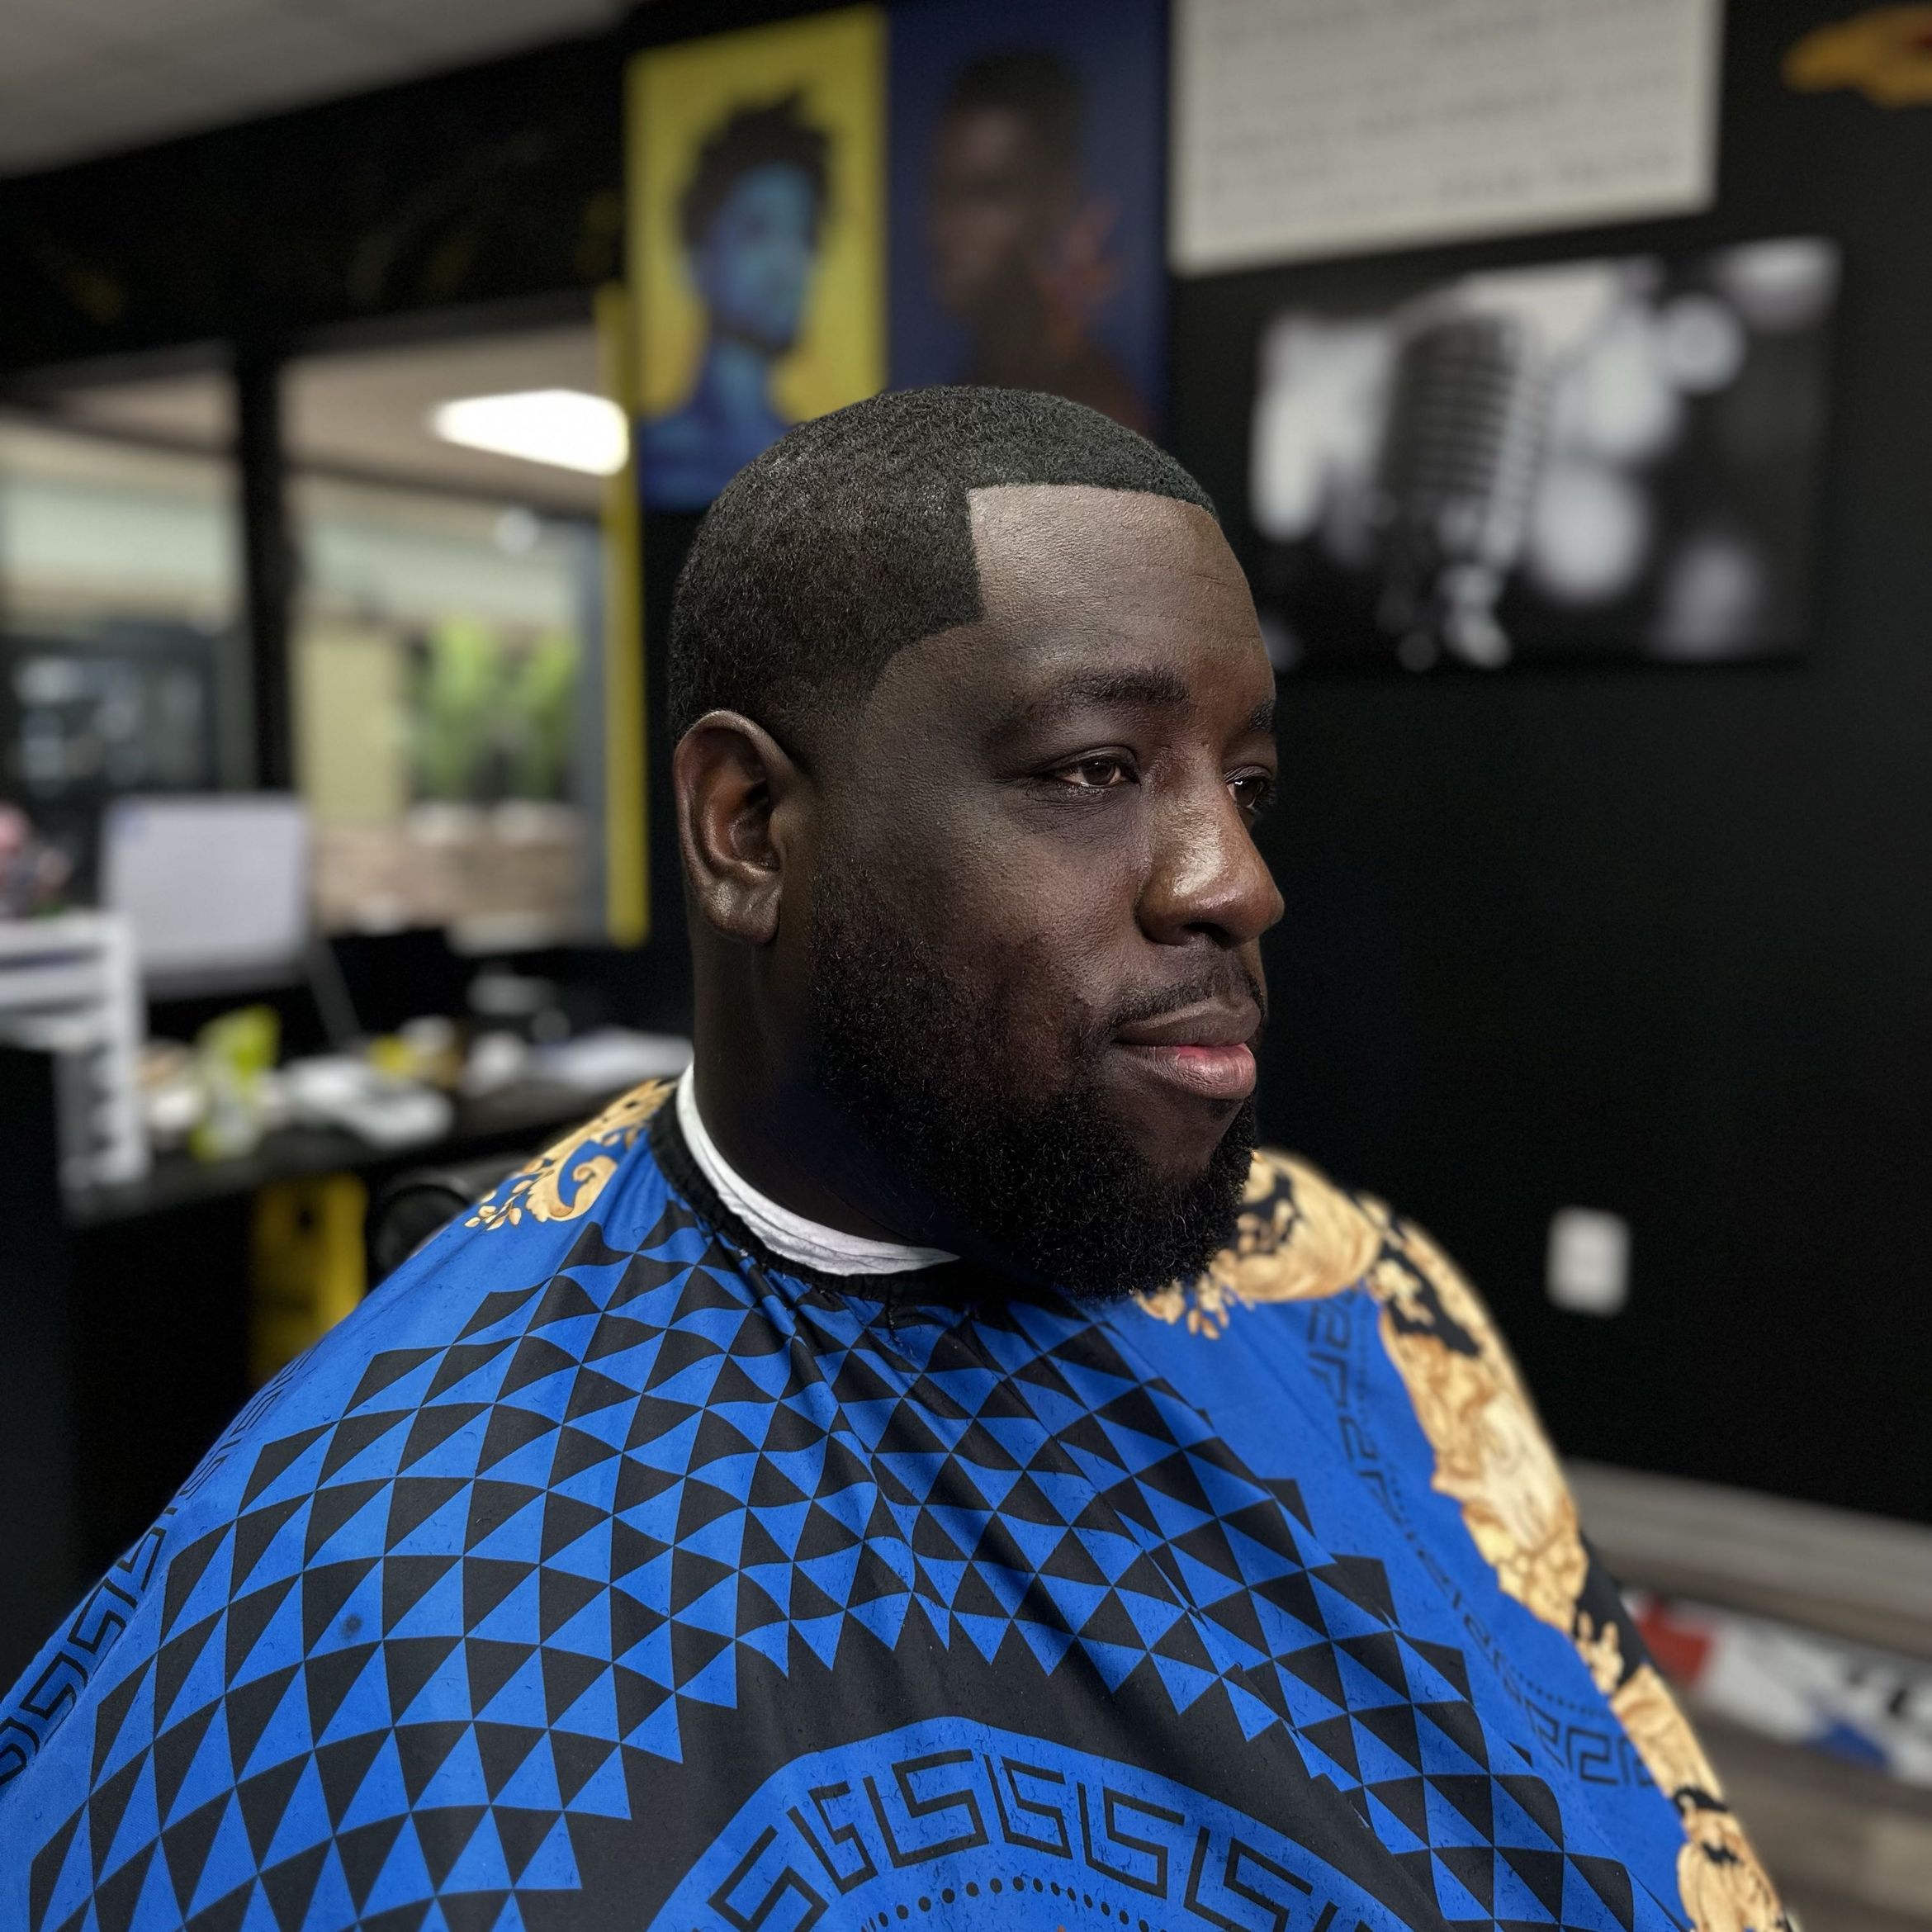 Gentlemens haircut 💈🔥 portfolio